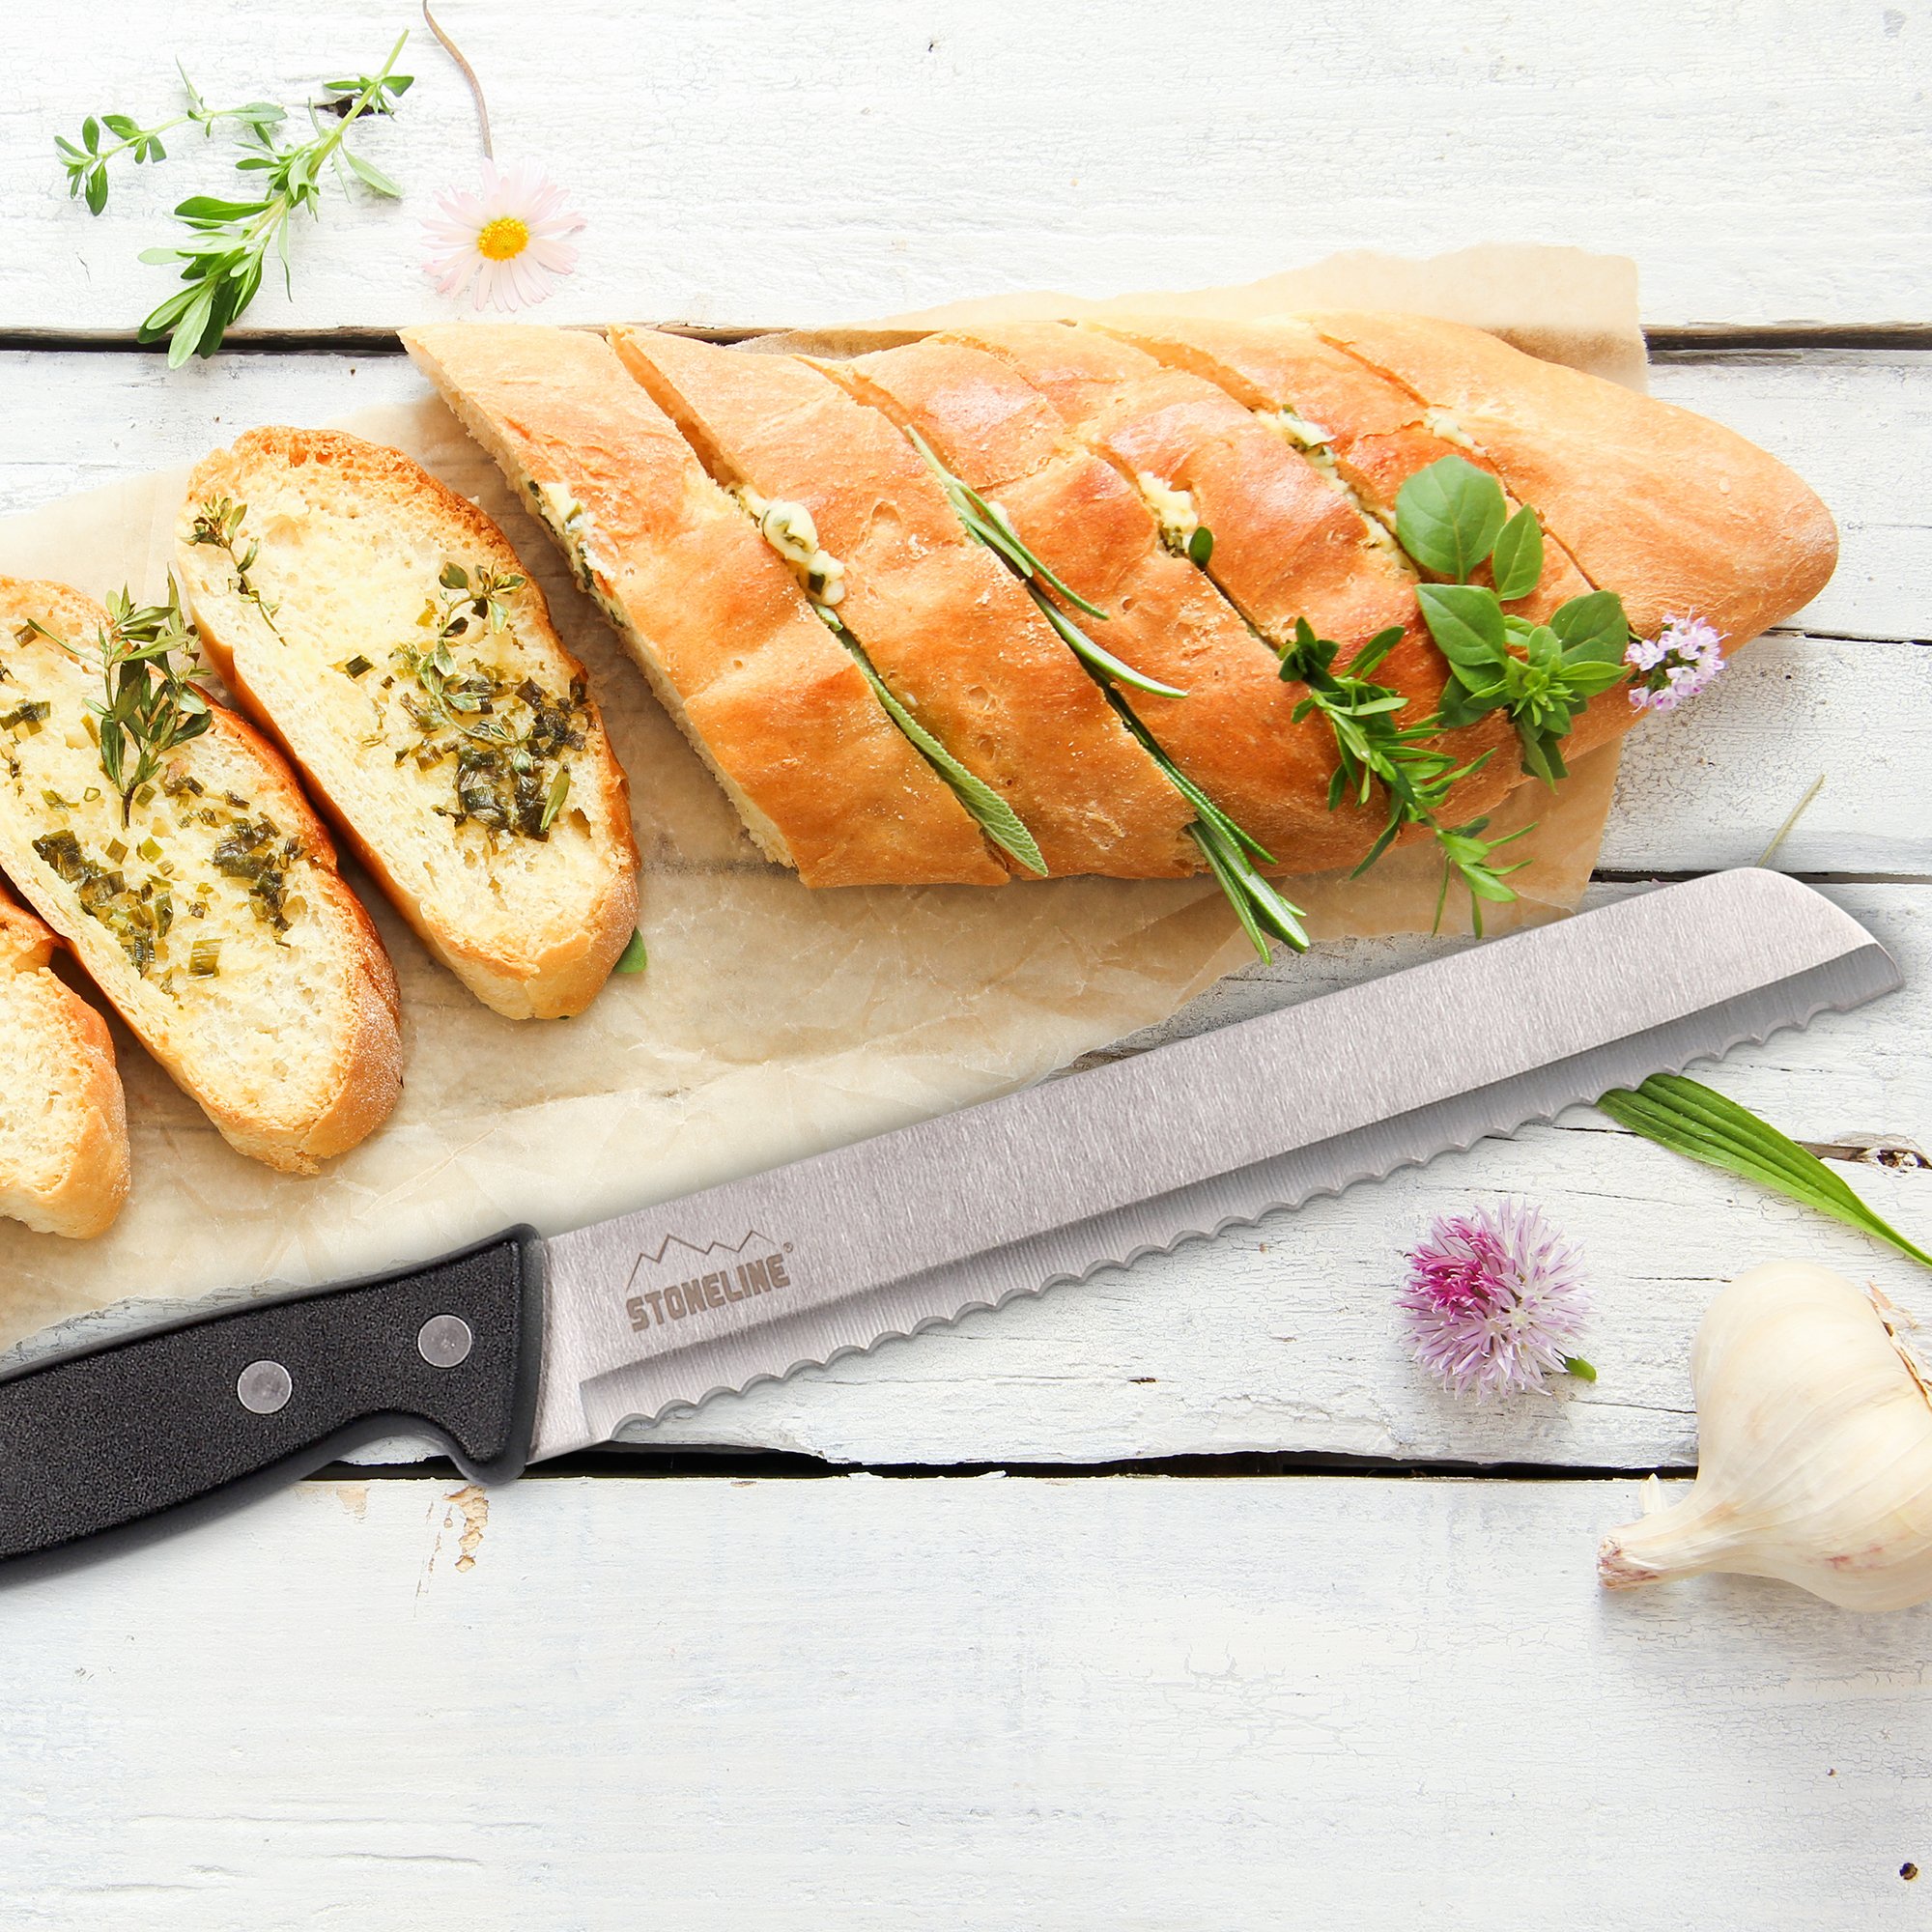 STONELINE® Stainless Steel Knife 31.5 cm Bread Knife, Safety Sheath